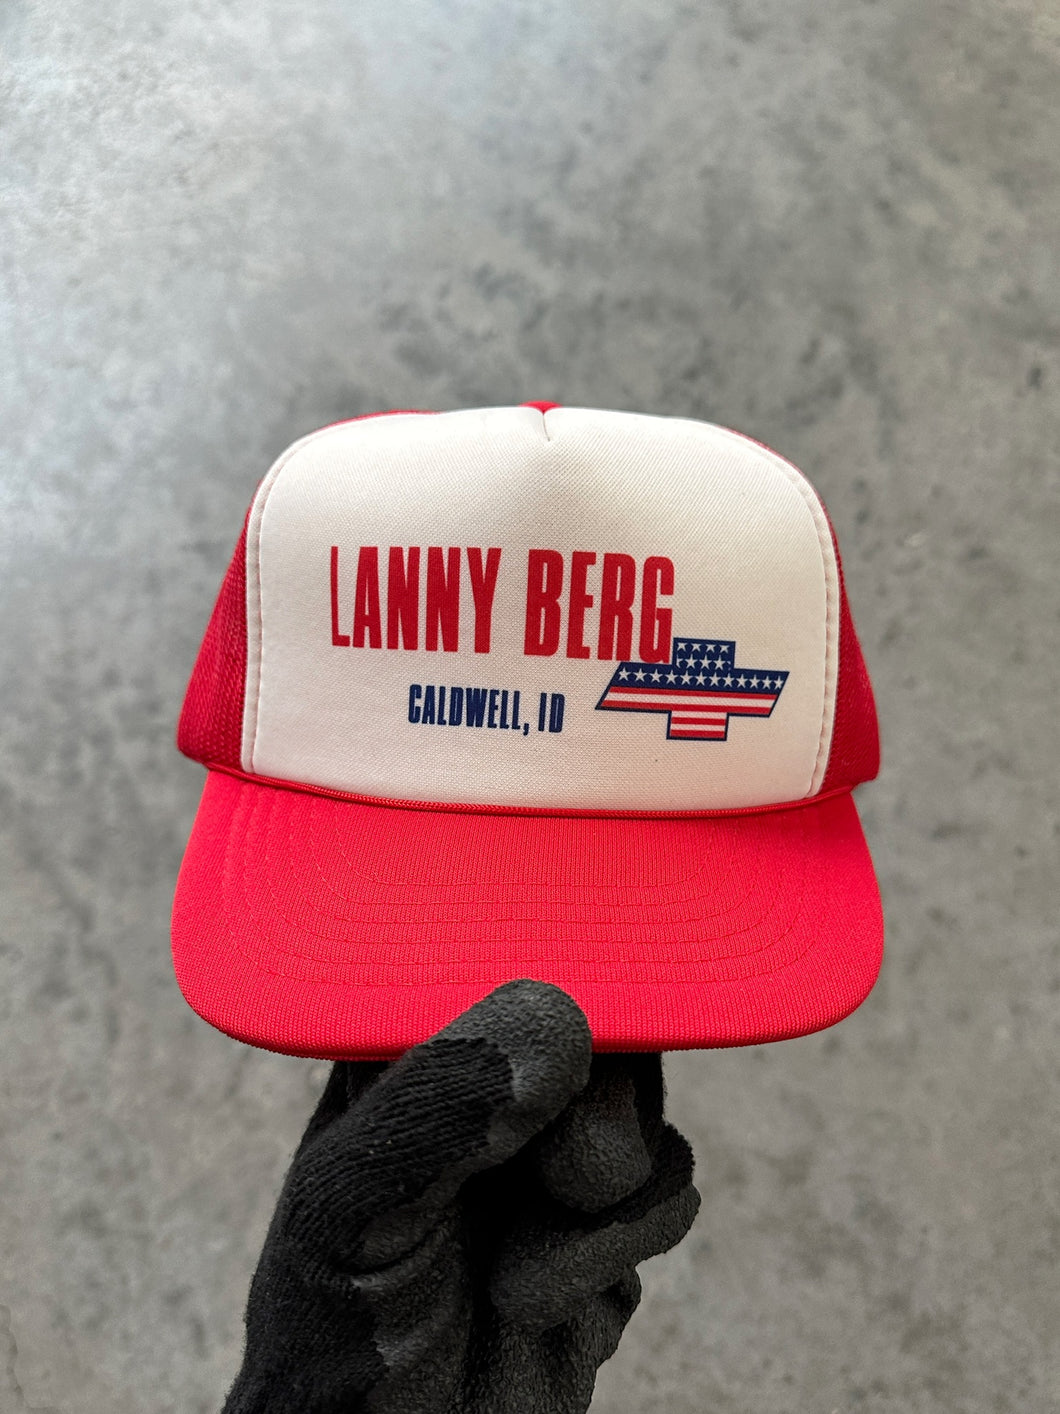 RED “LANNY BERG” TRUCKER HAT - 1990S